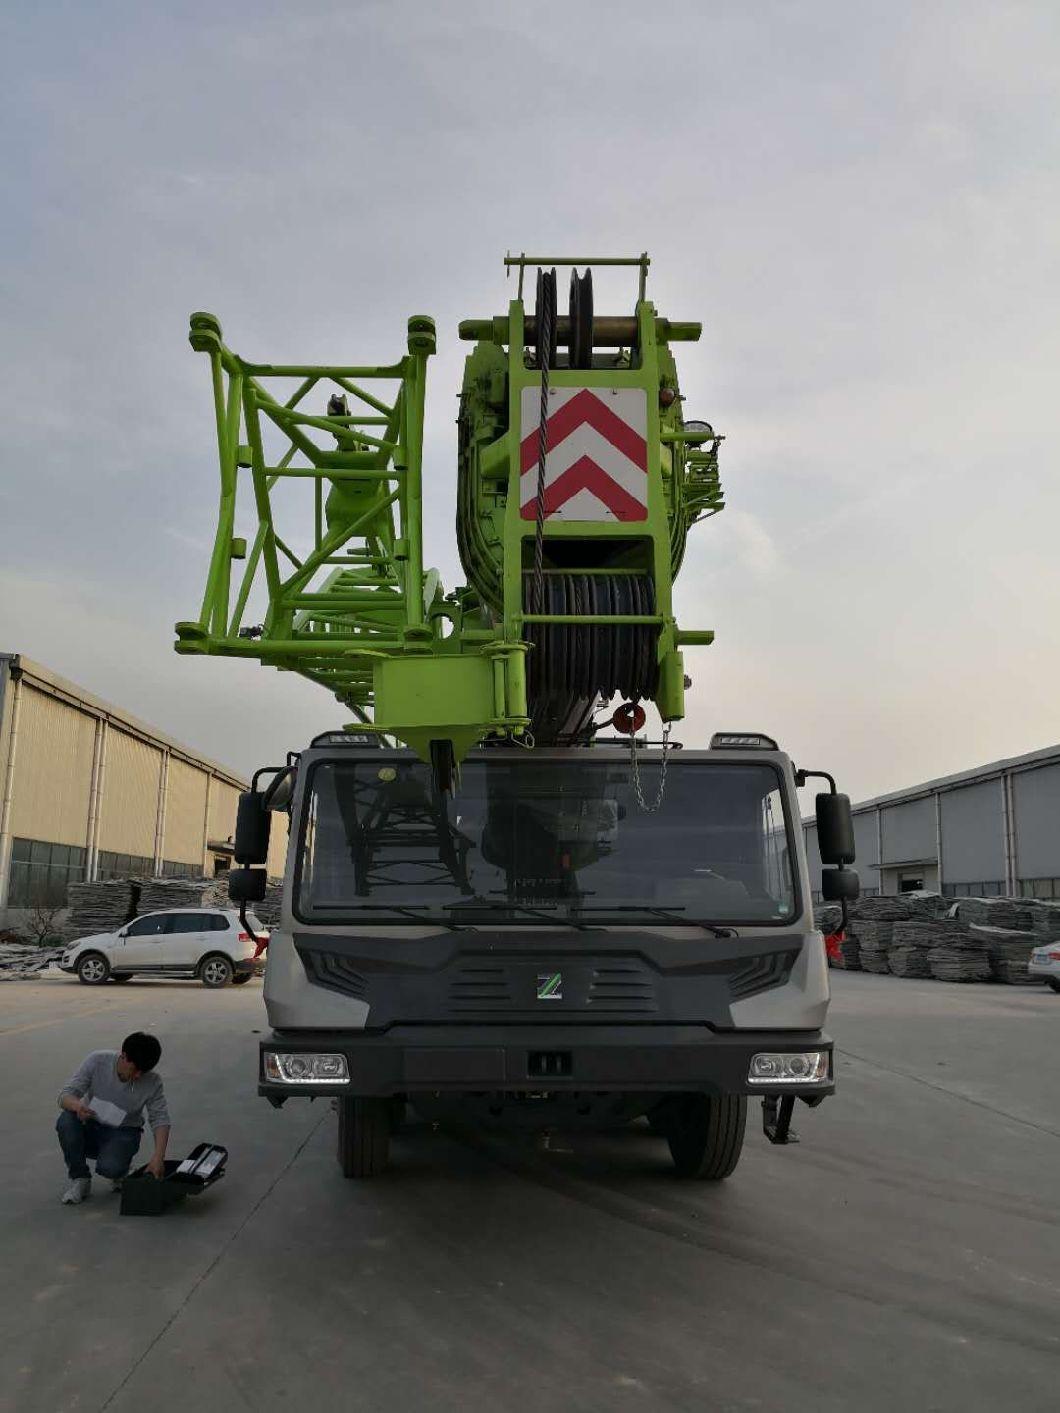 Zoomlion 70 Ton Truck Crane Ztc700V552 Sale in Mongolia